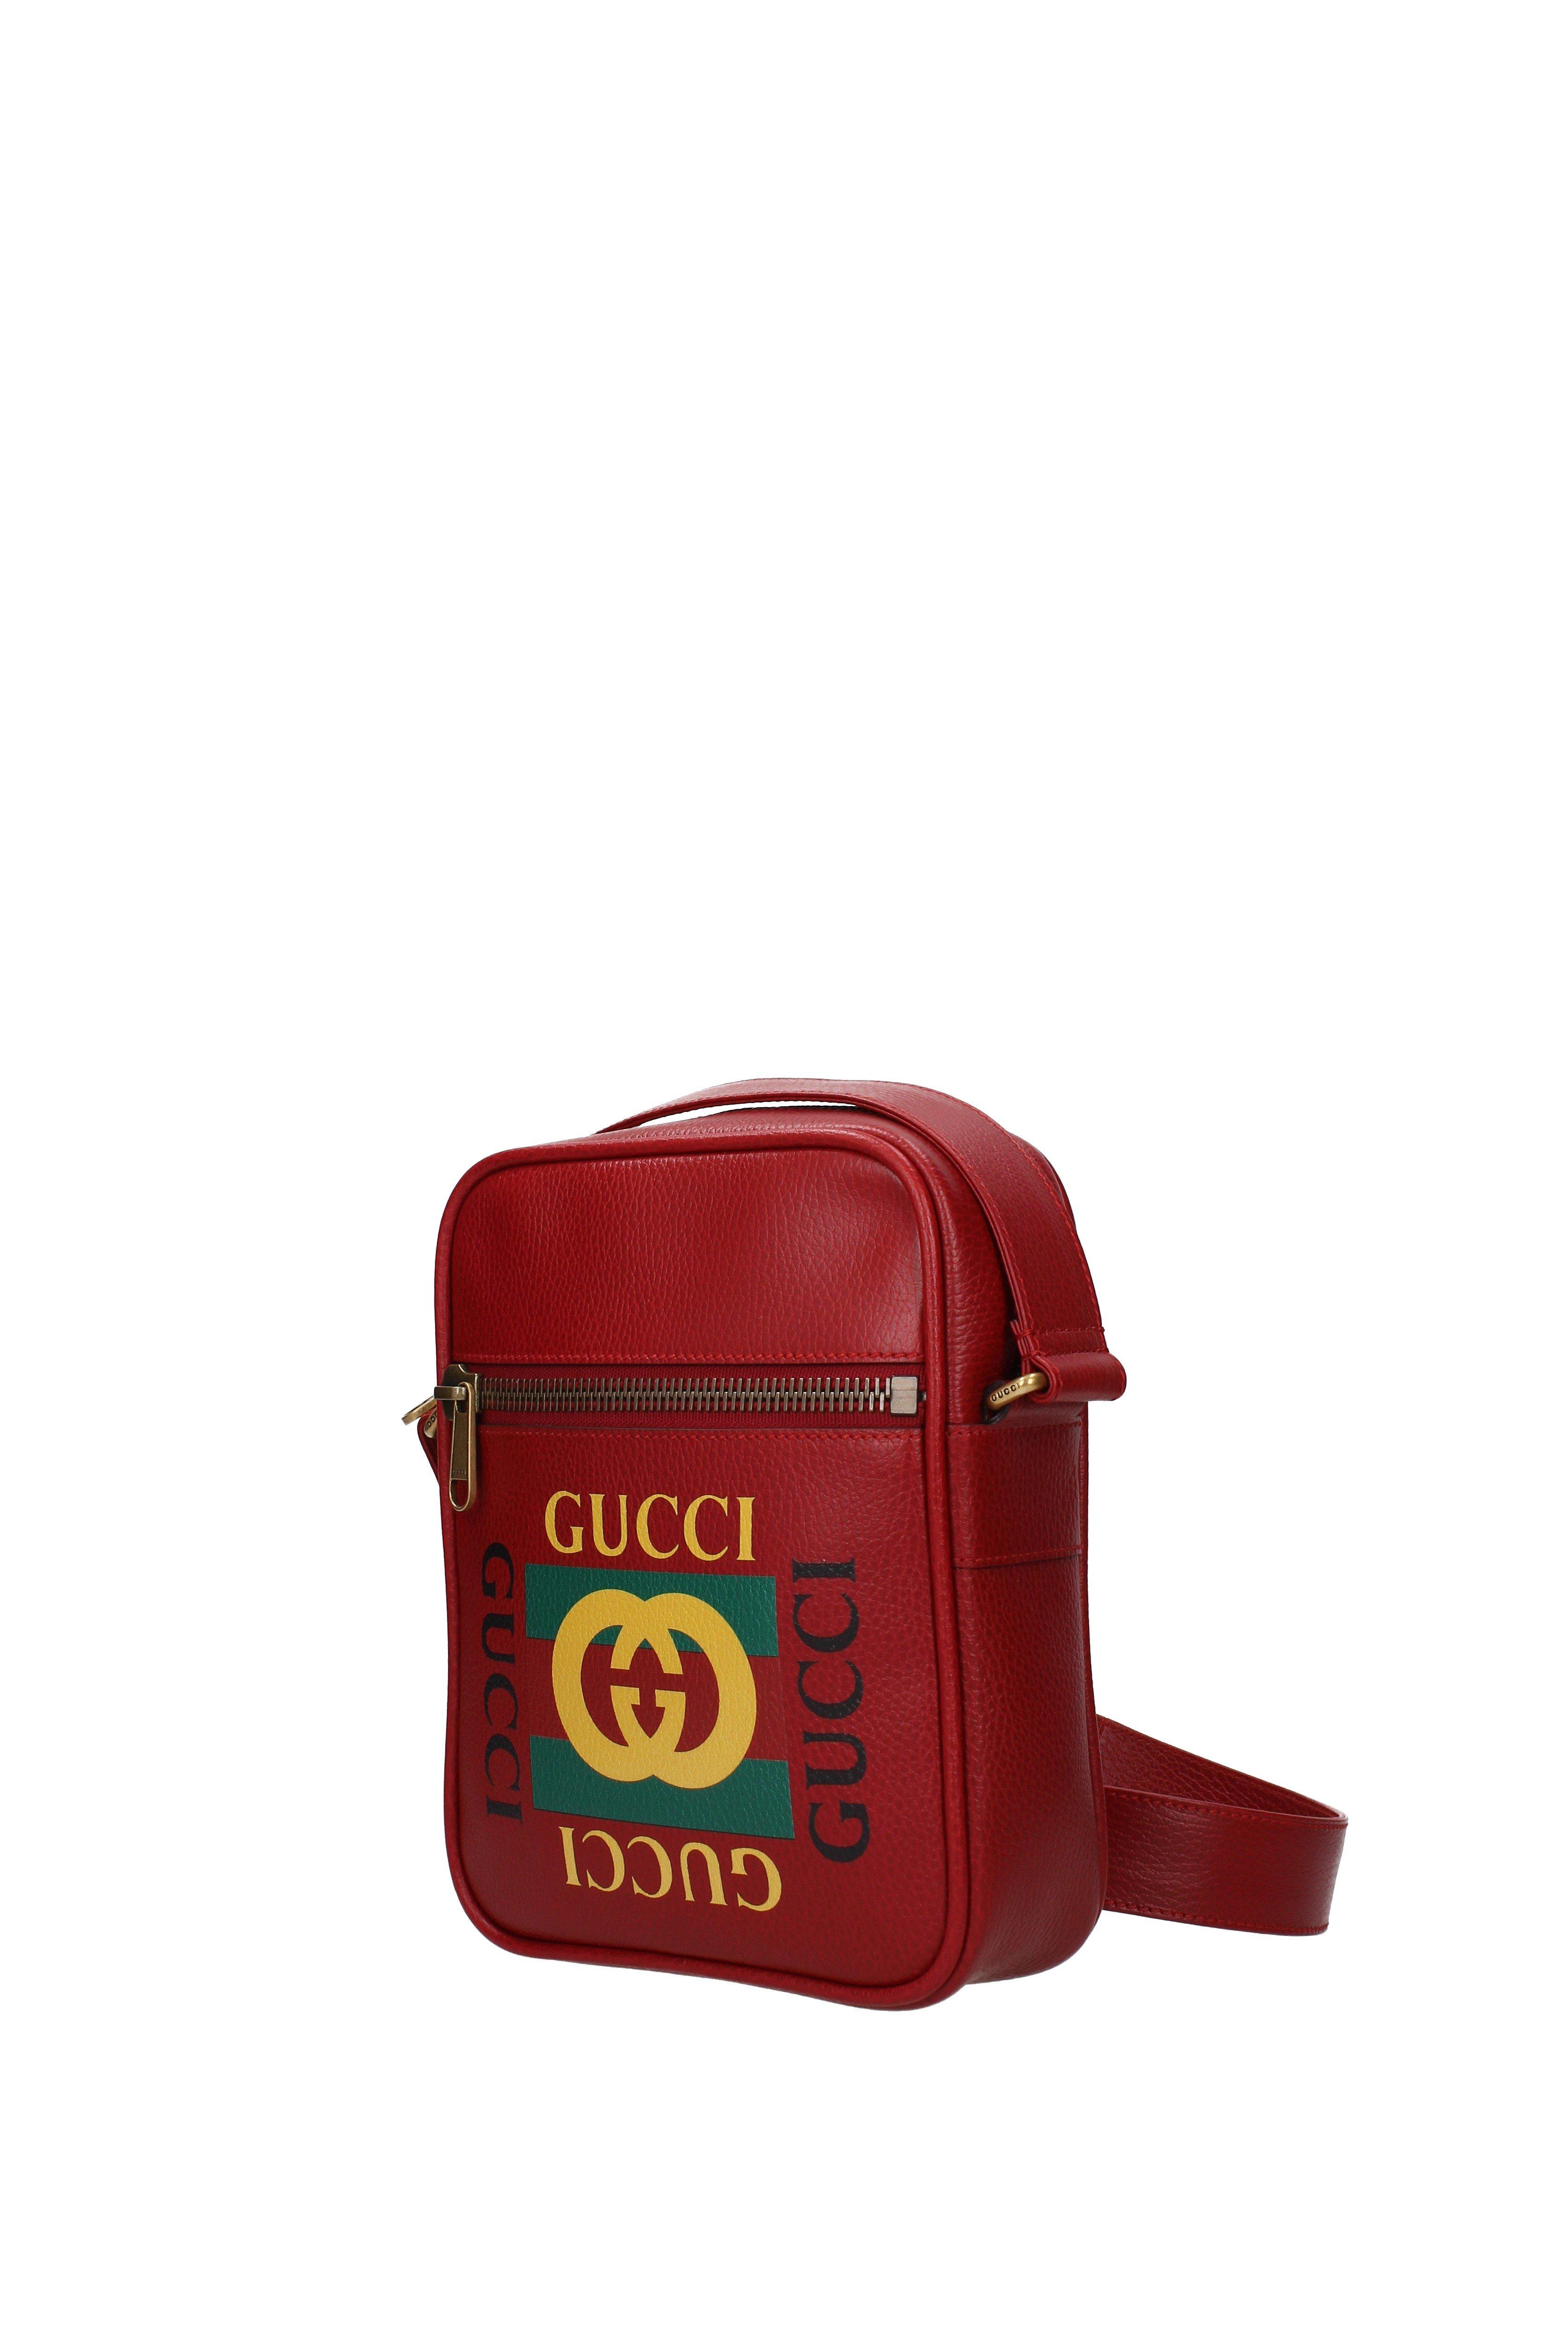 gucci messenger bag red